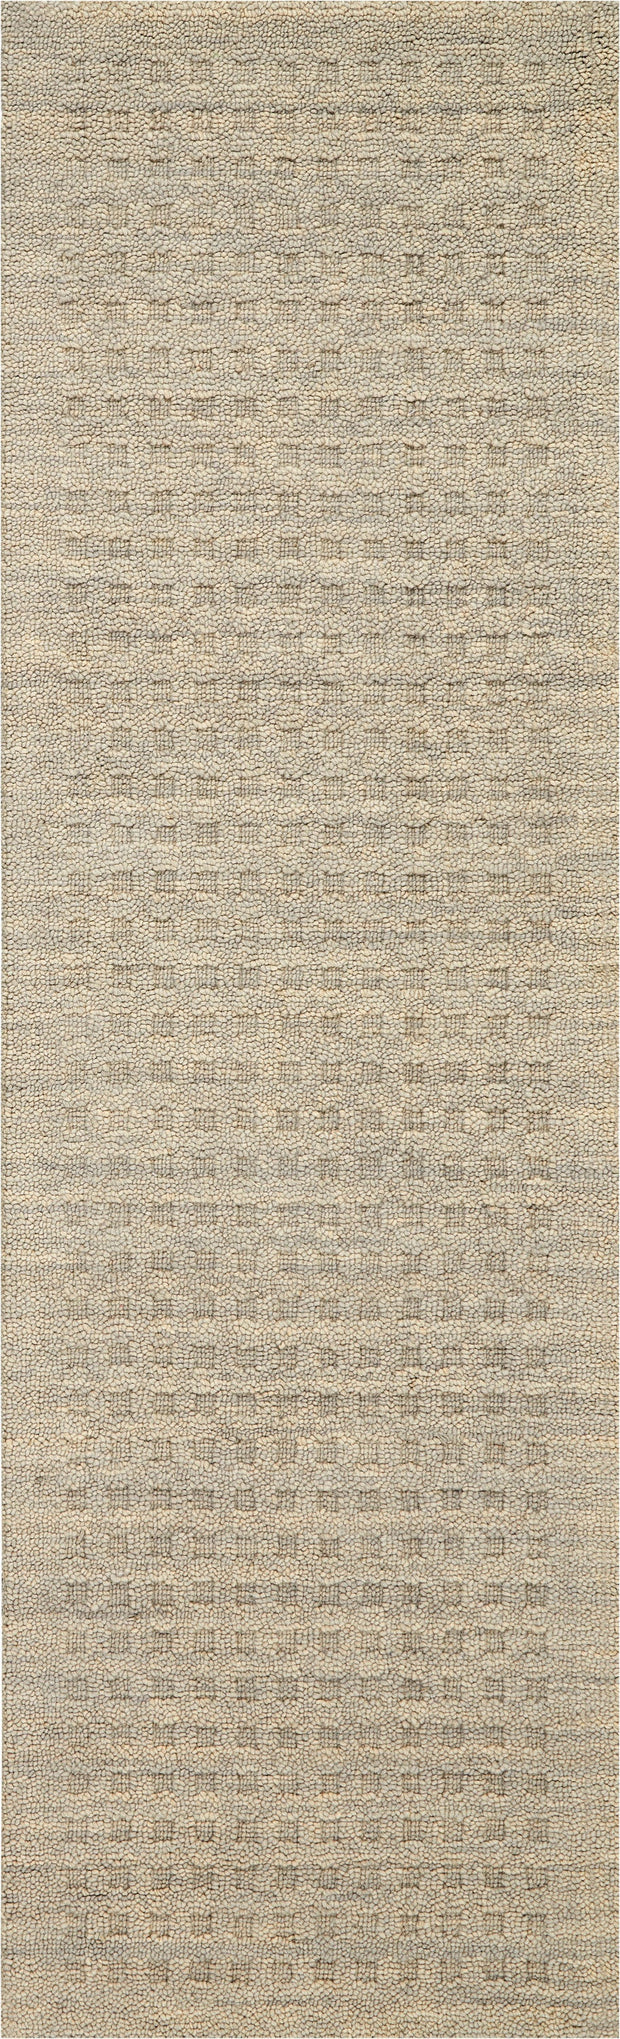 marana handmade taupe rug by nourison 99446400161 redo 2